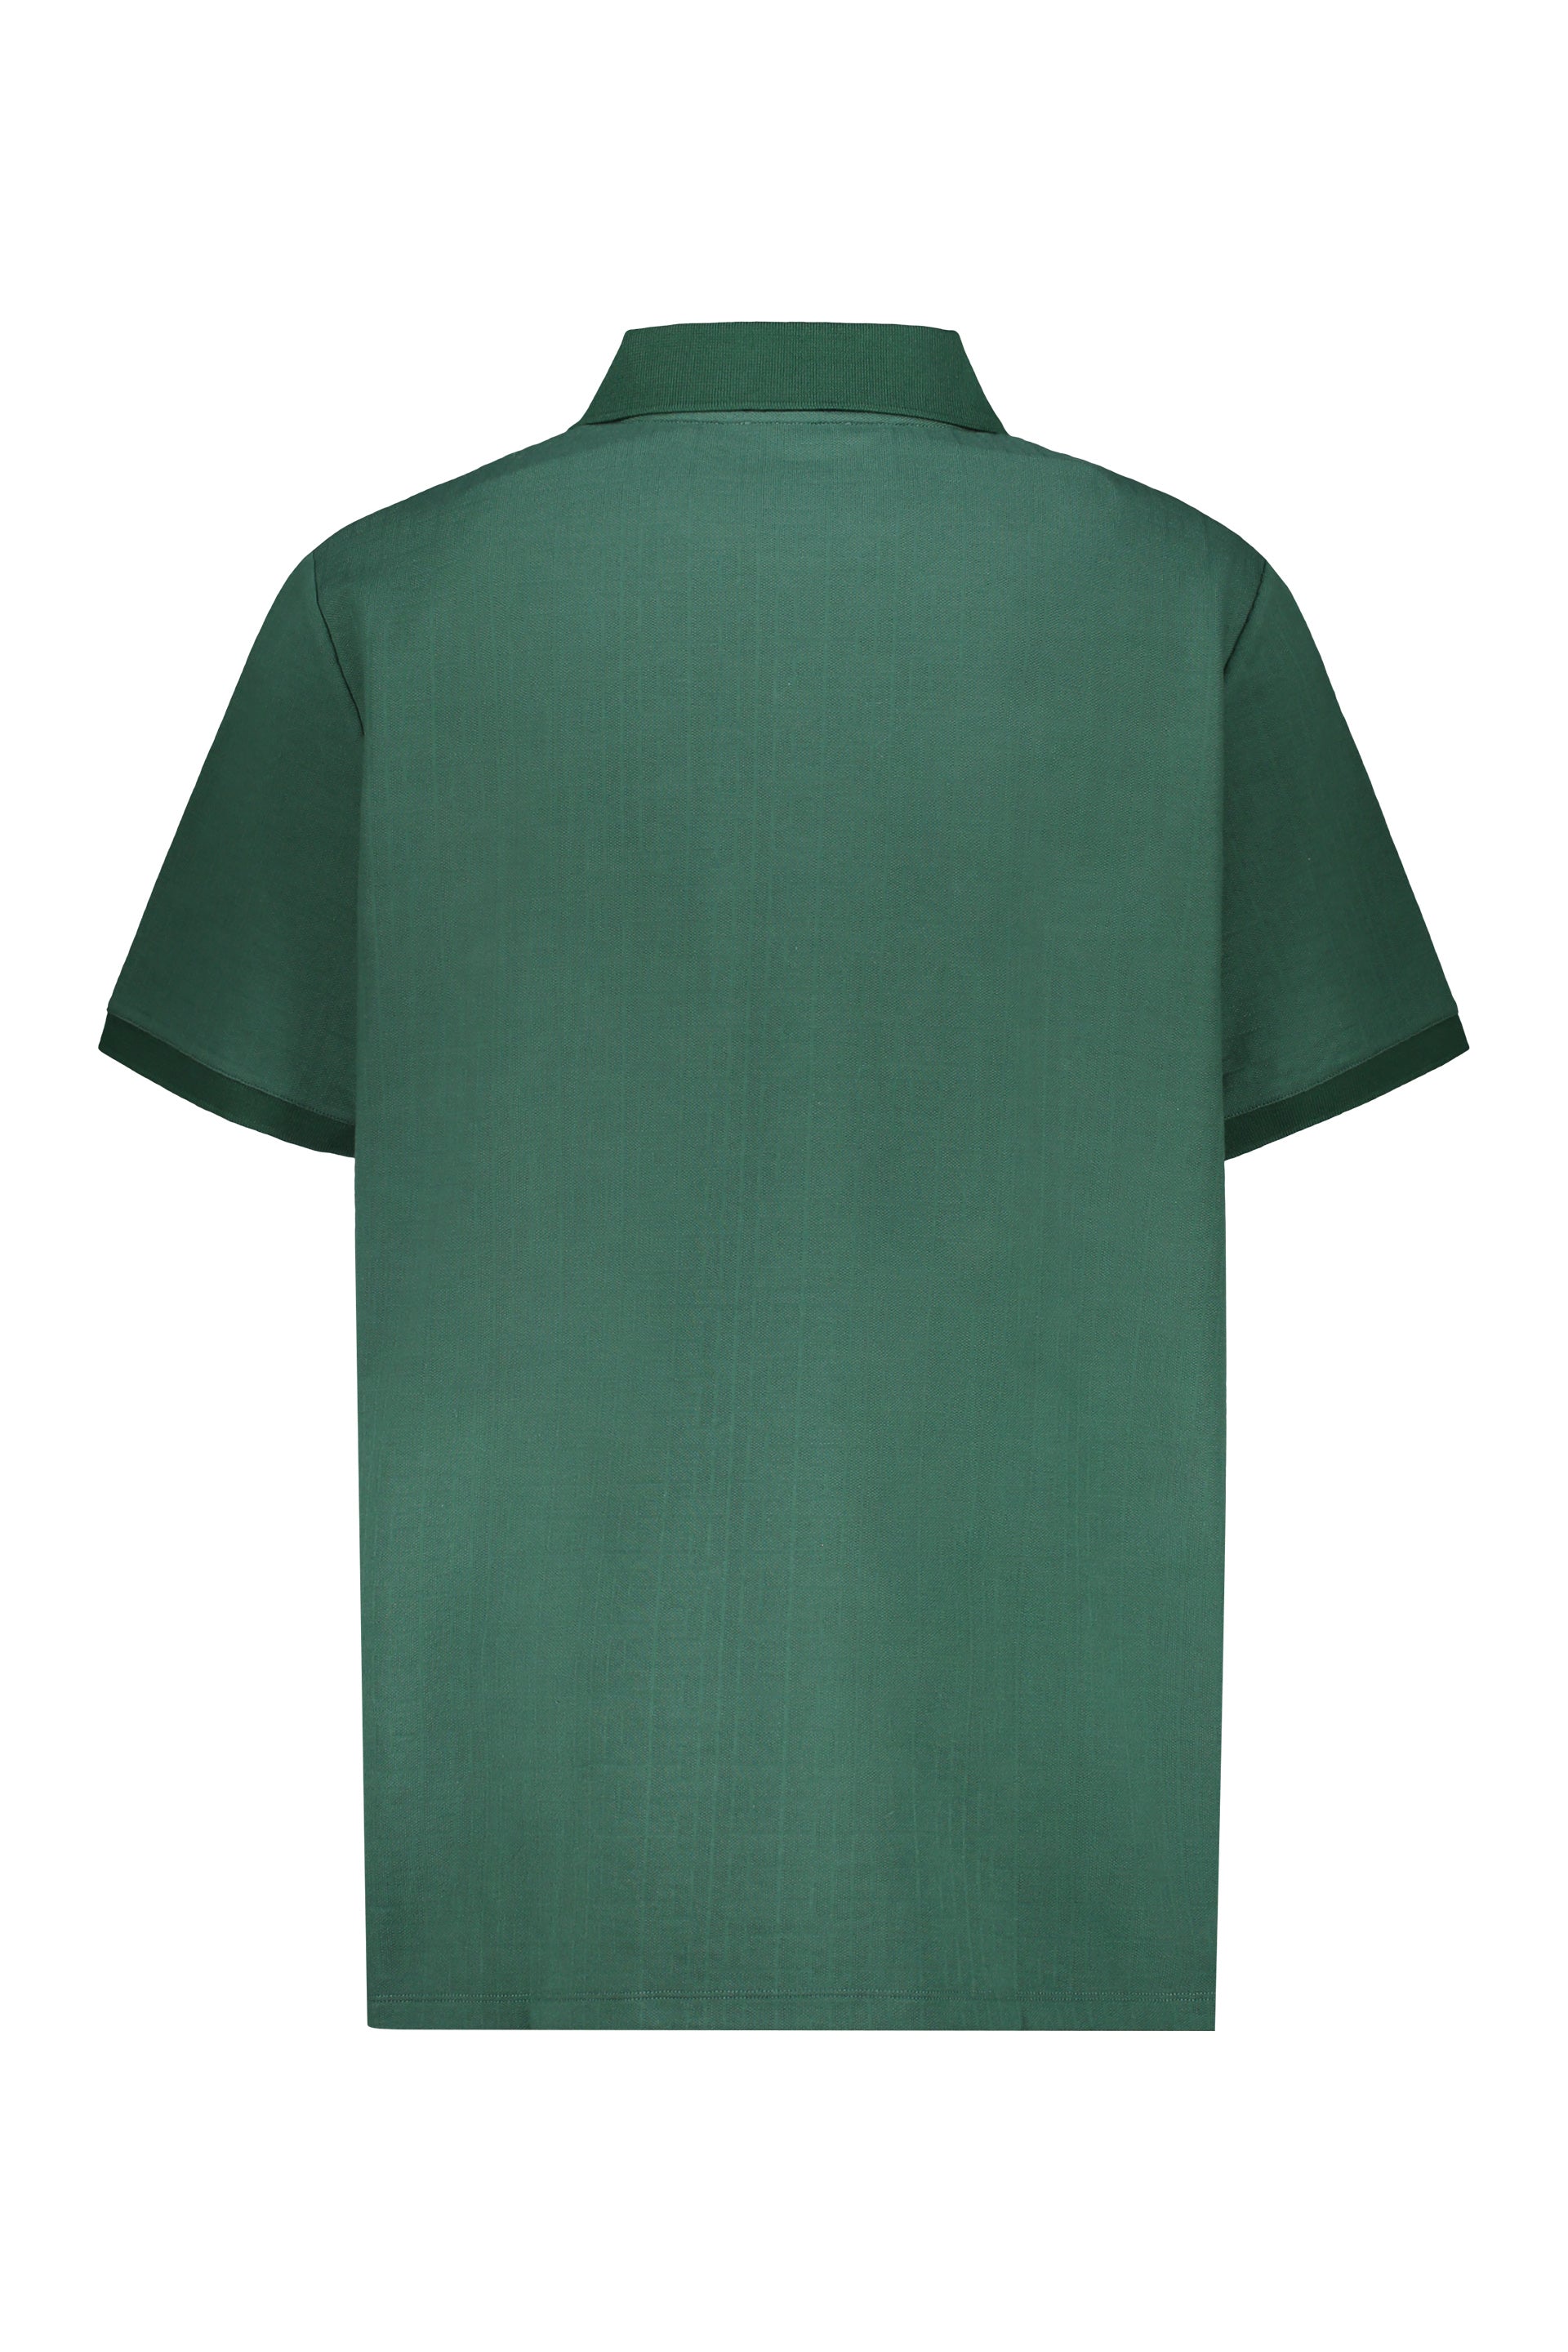 Balmain-OUTLET-SALE-Cotton-polo-shirt-Shirts-ARCHIVE-COLLECTION-2.jpg